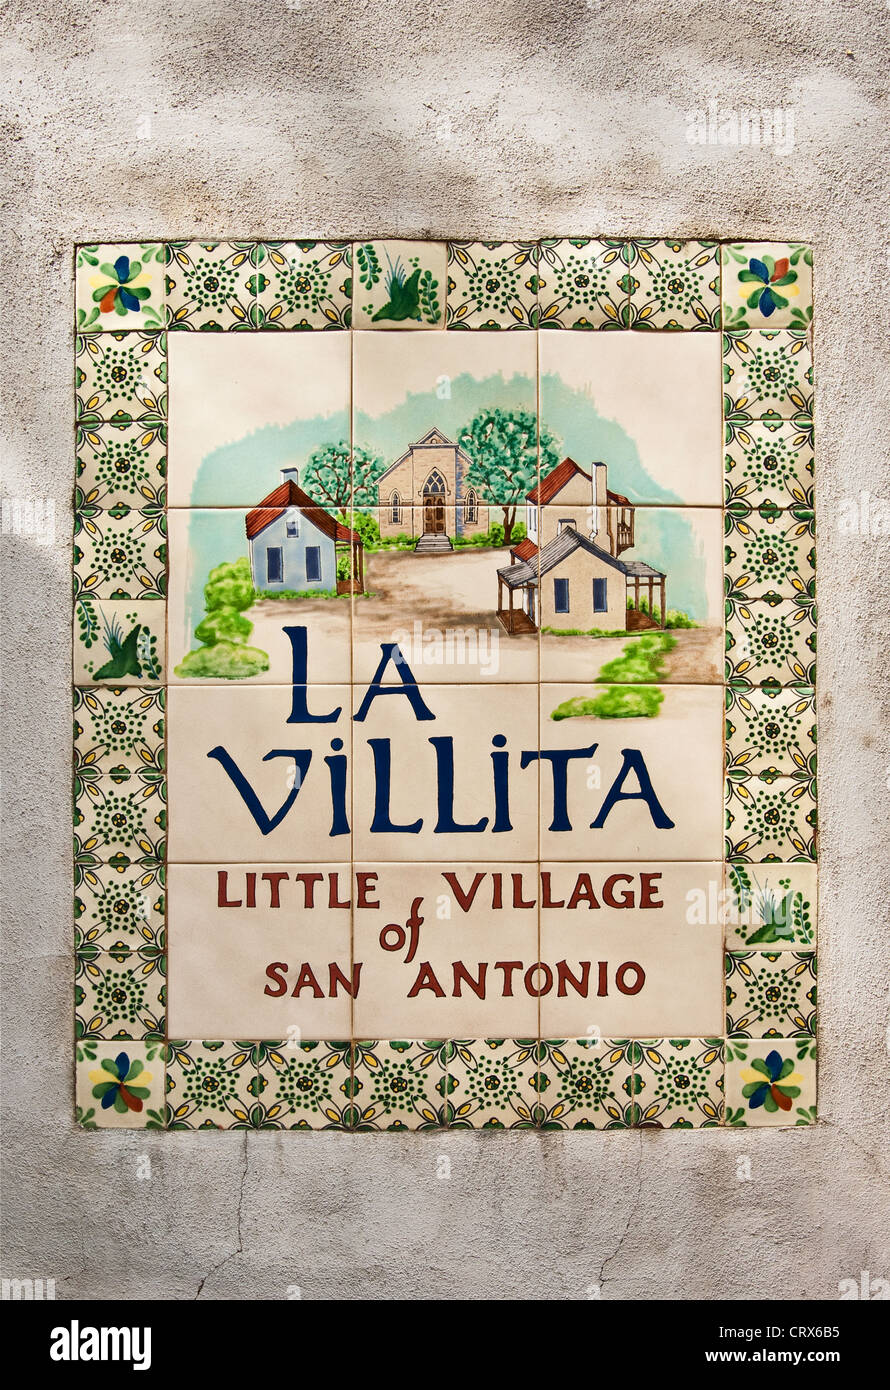 Tile mosaic at stairs leading from River Walk to La Villita, San Antonio, Texas, USA Stock Photo